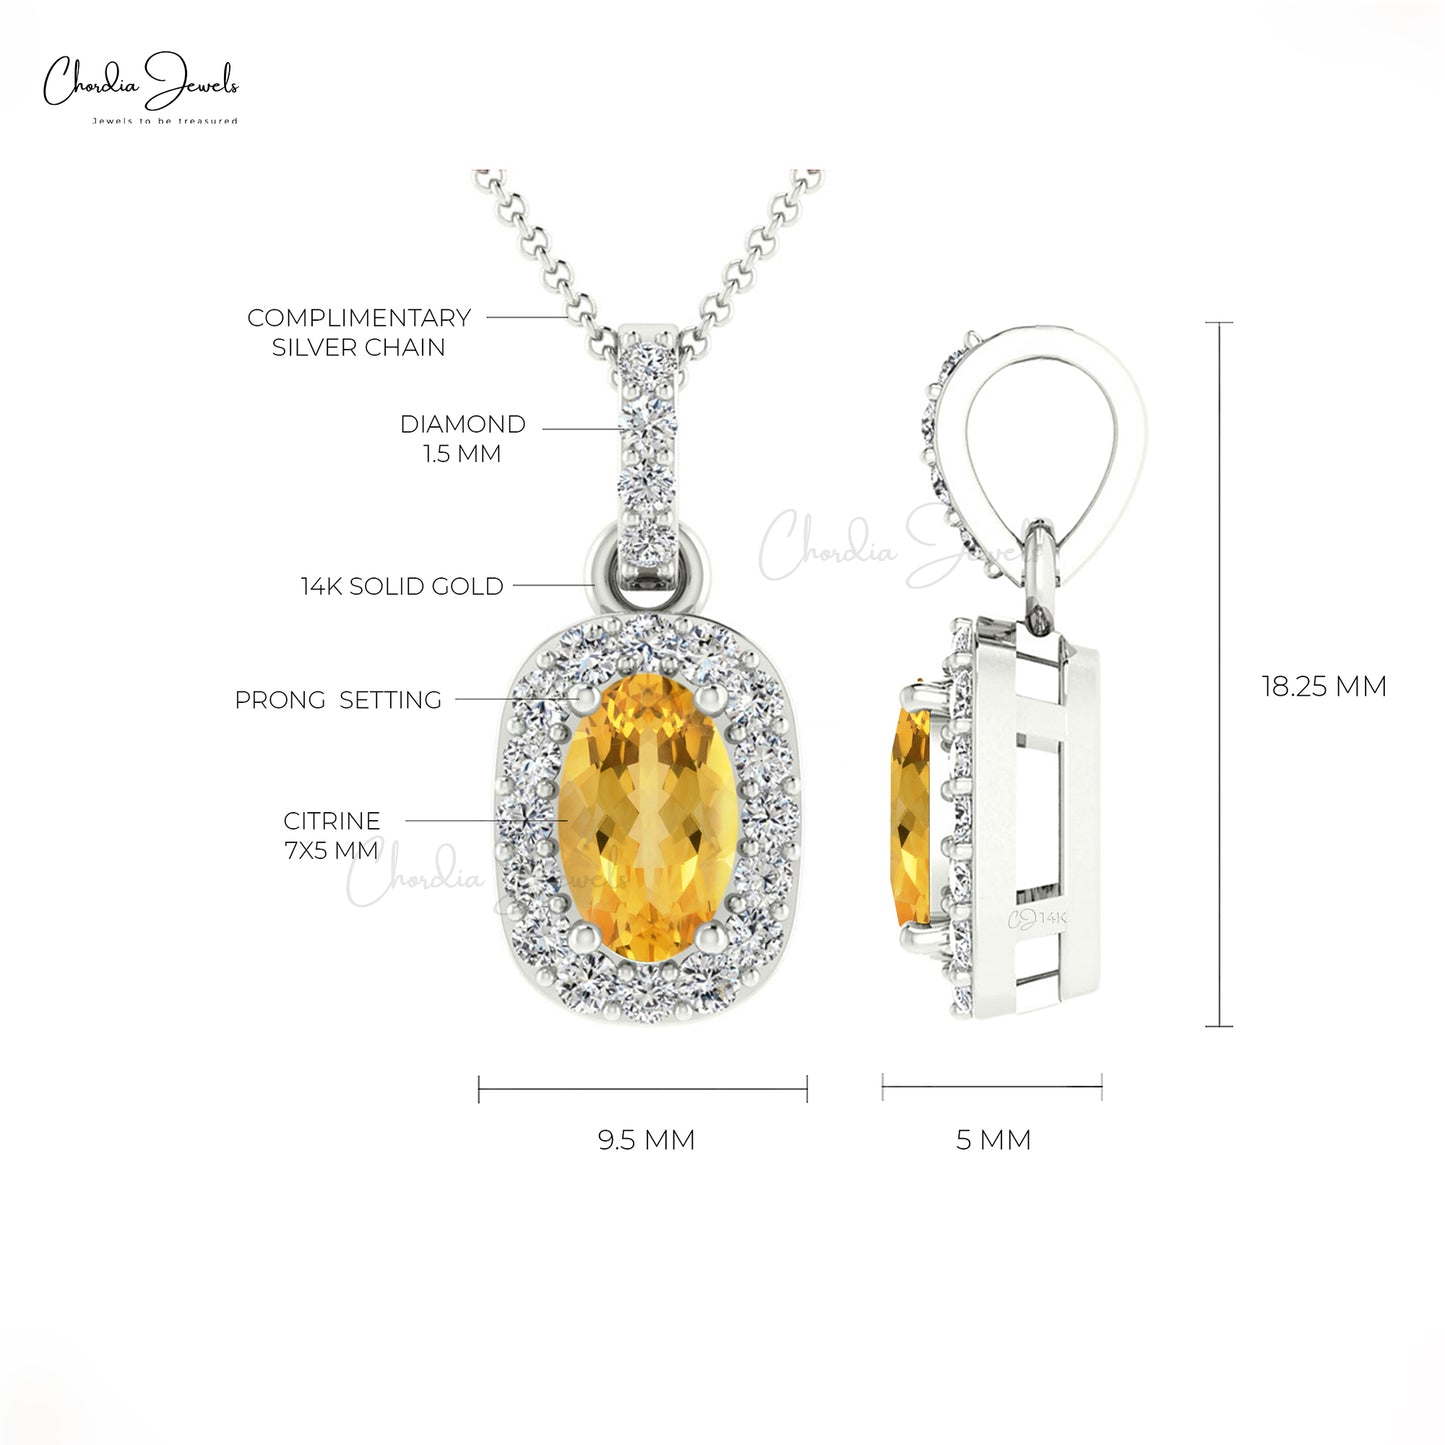 Natural Citrine Halo Pendant 7x5mm Oval Cut Gemstone Handmade Pendant 14k Real Gold Diamond Pendant Jewelry For Gift